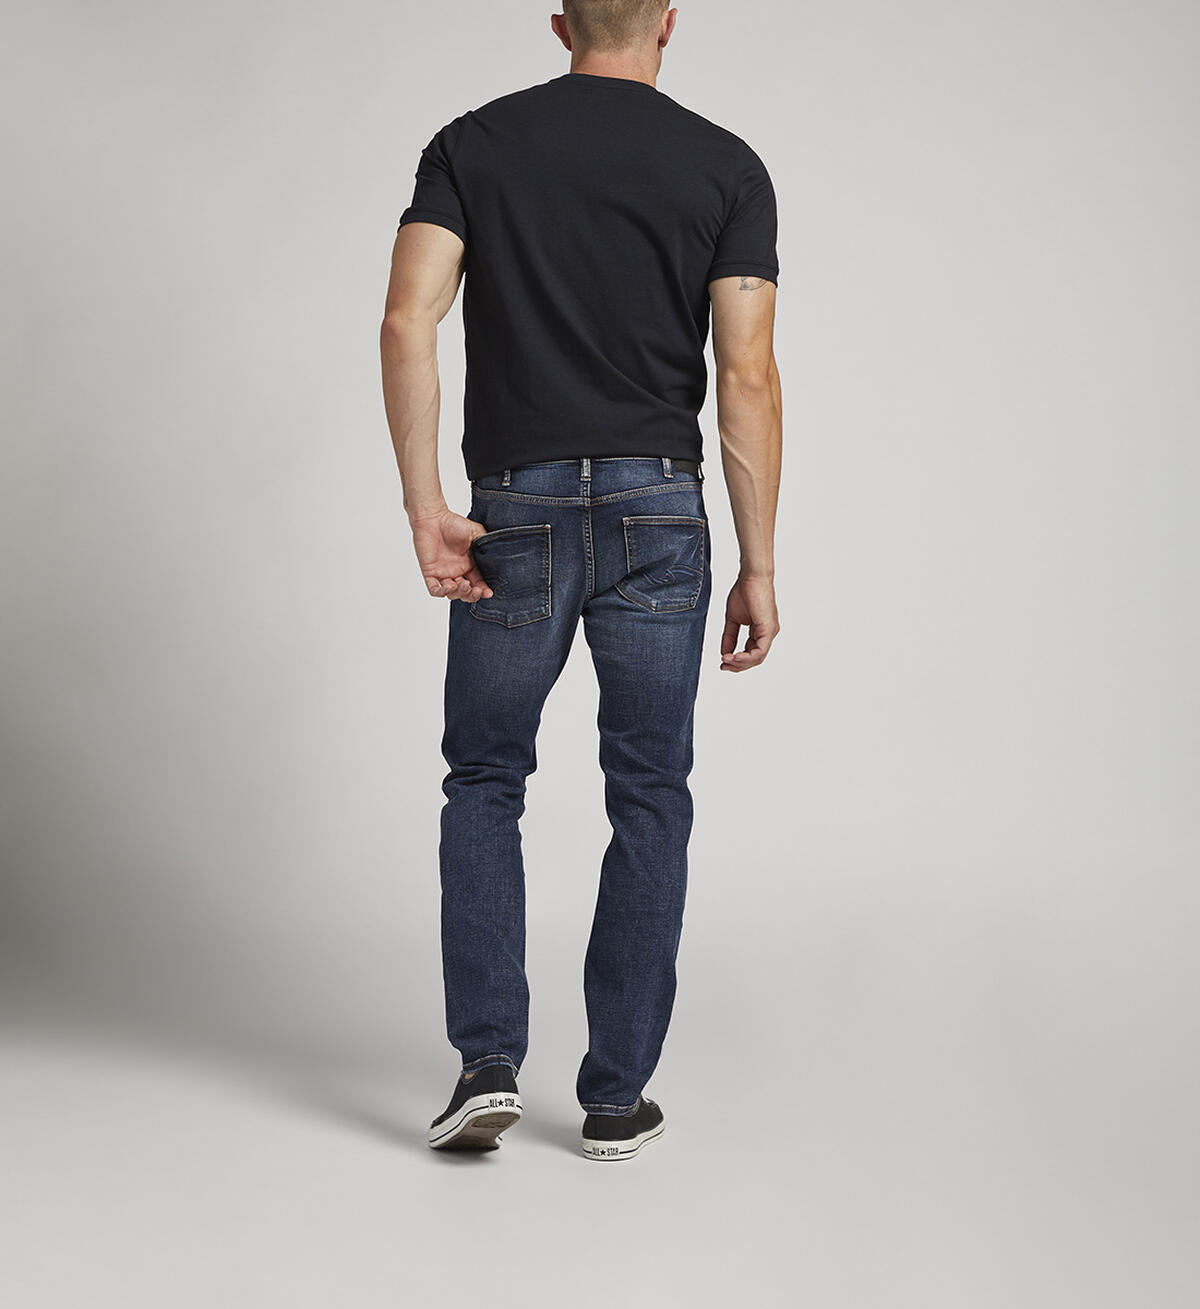 Taavi Skinny Fit Skinny Leg Jeans, Indigo, hi-res image number 0